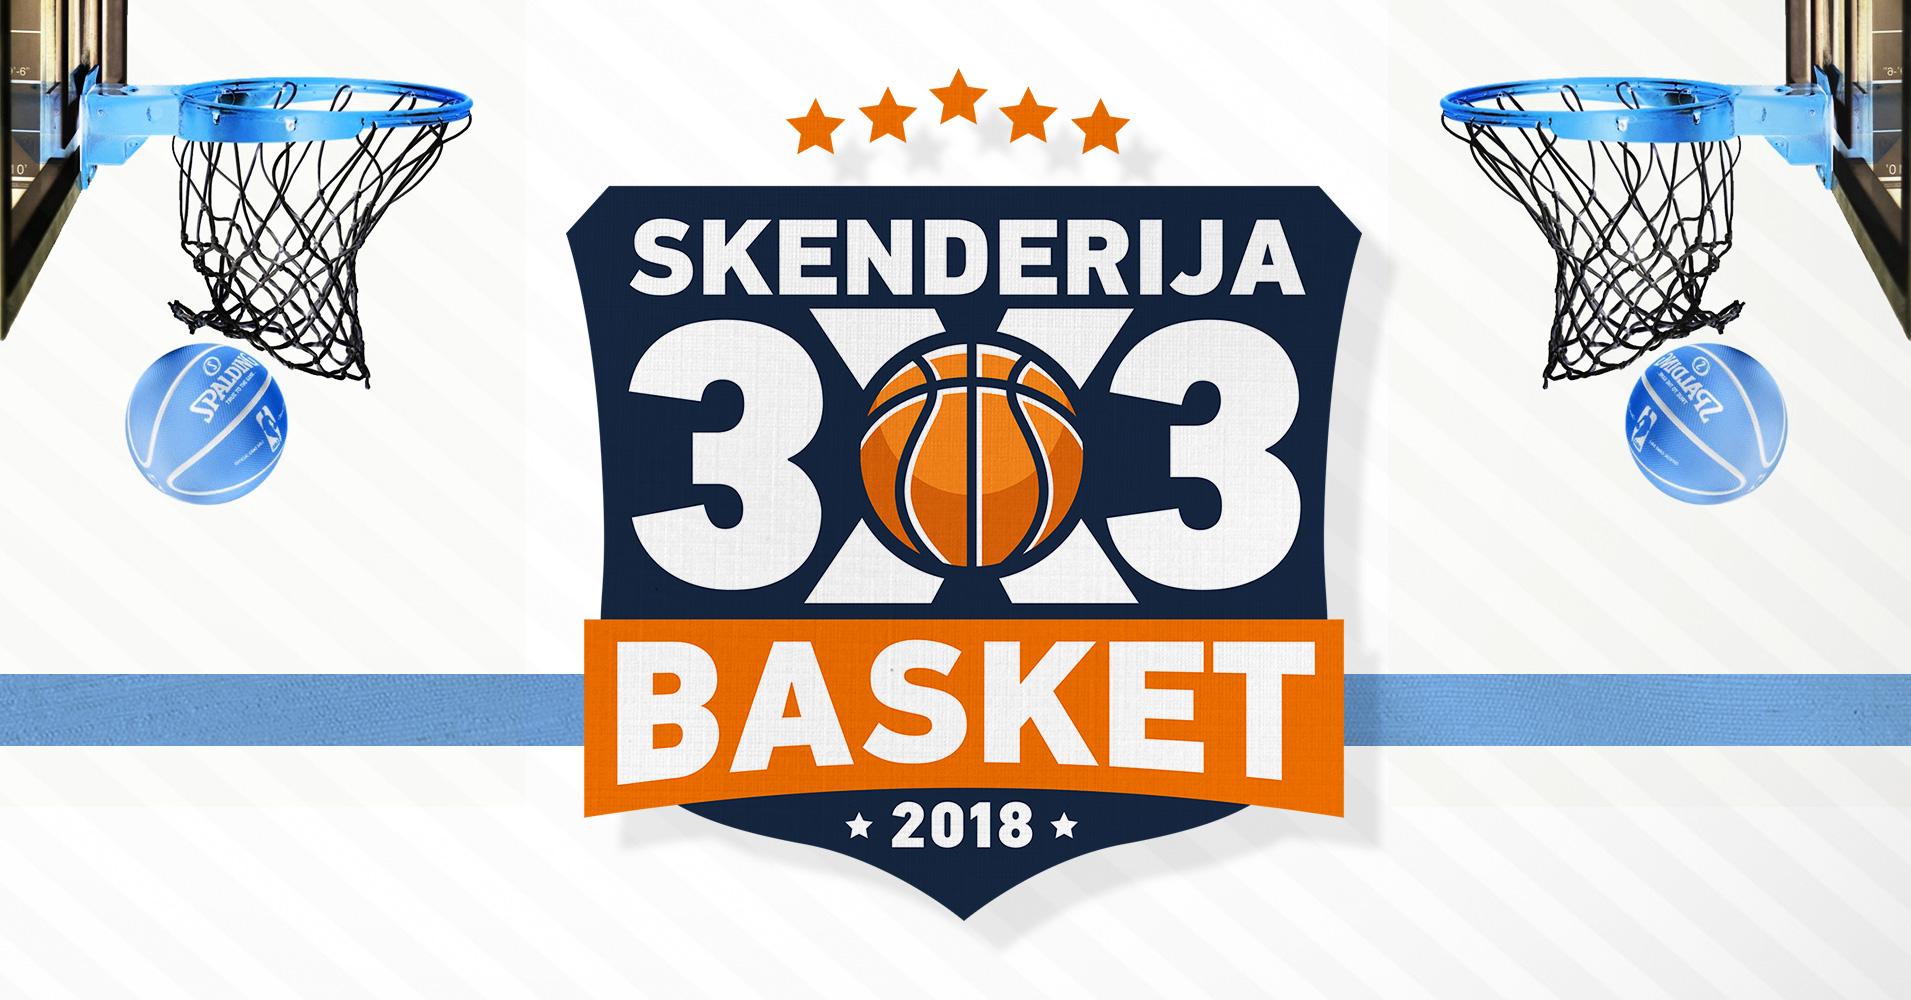 Na platou Centra Skenderija turnir u basketu 3x3